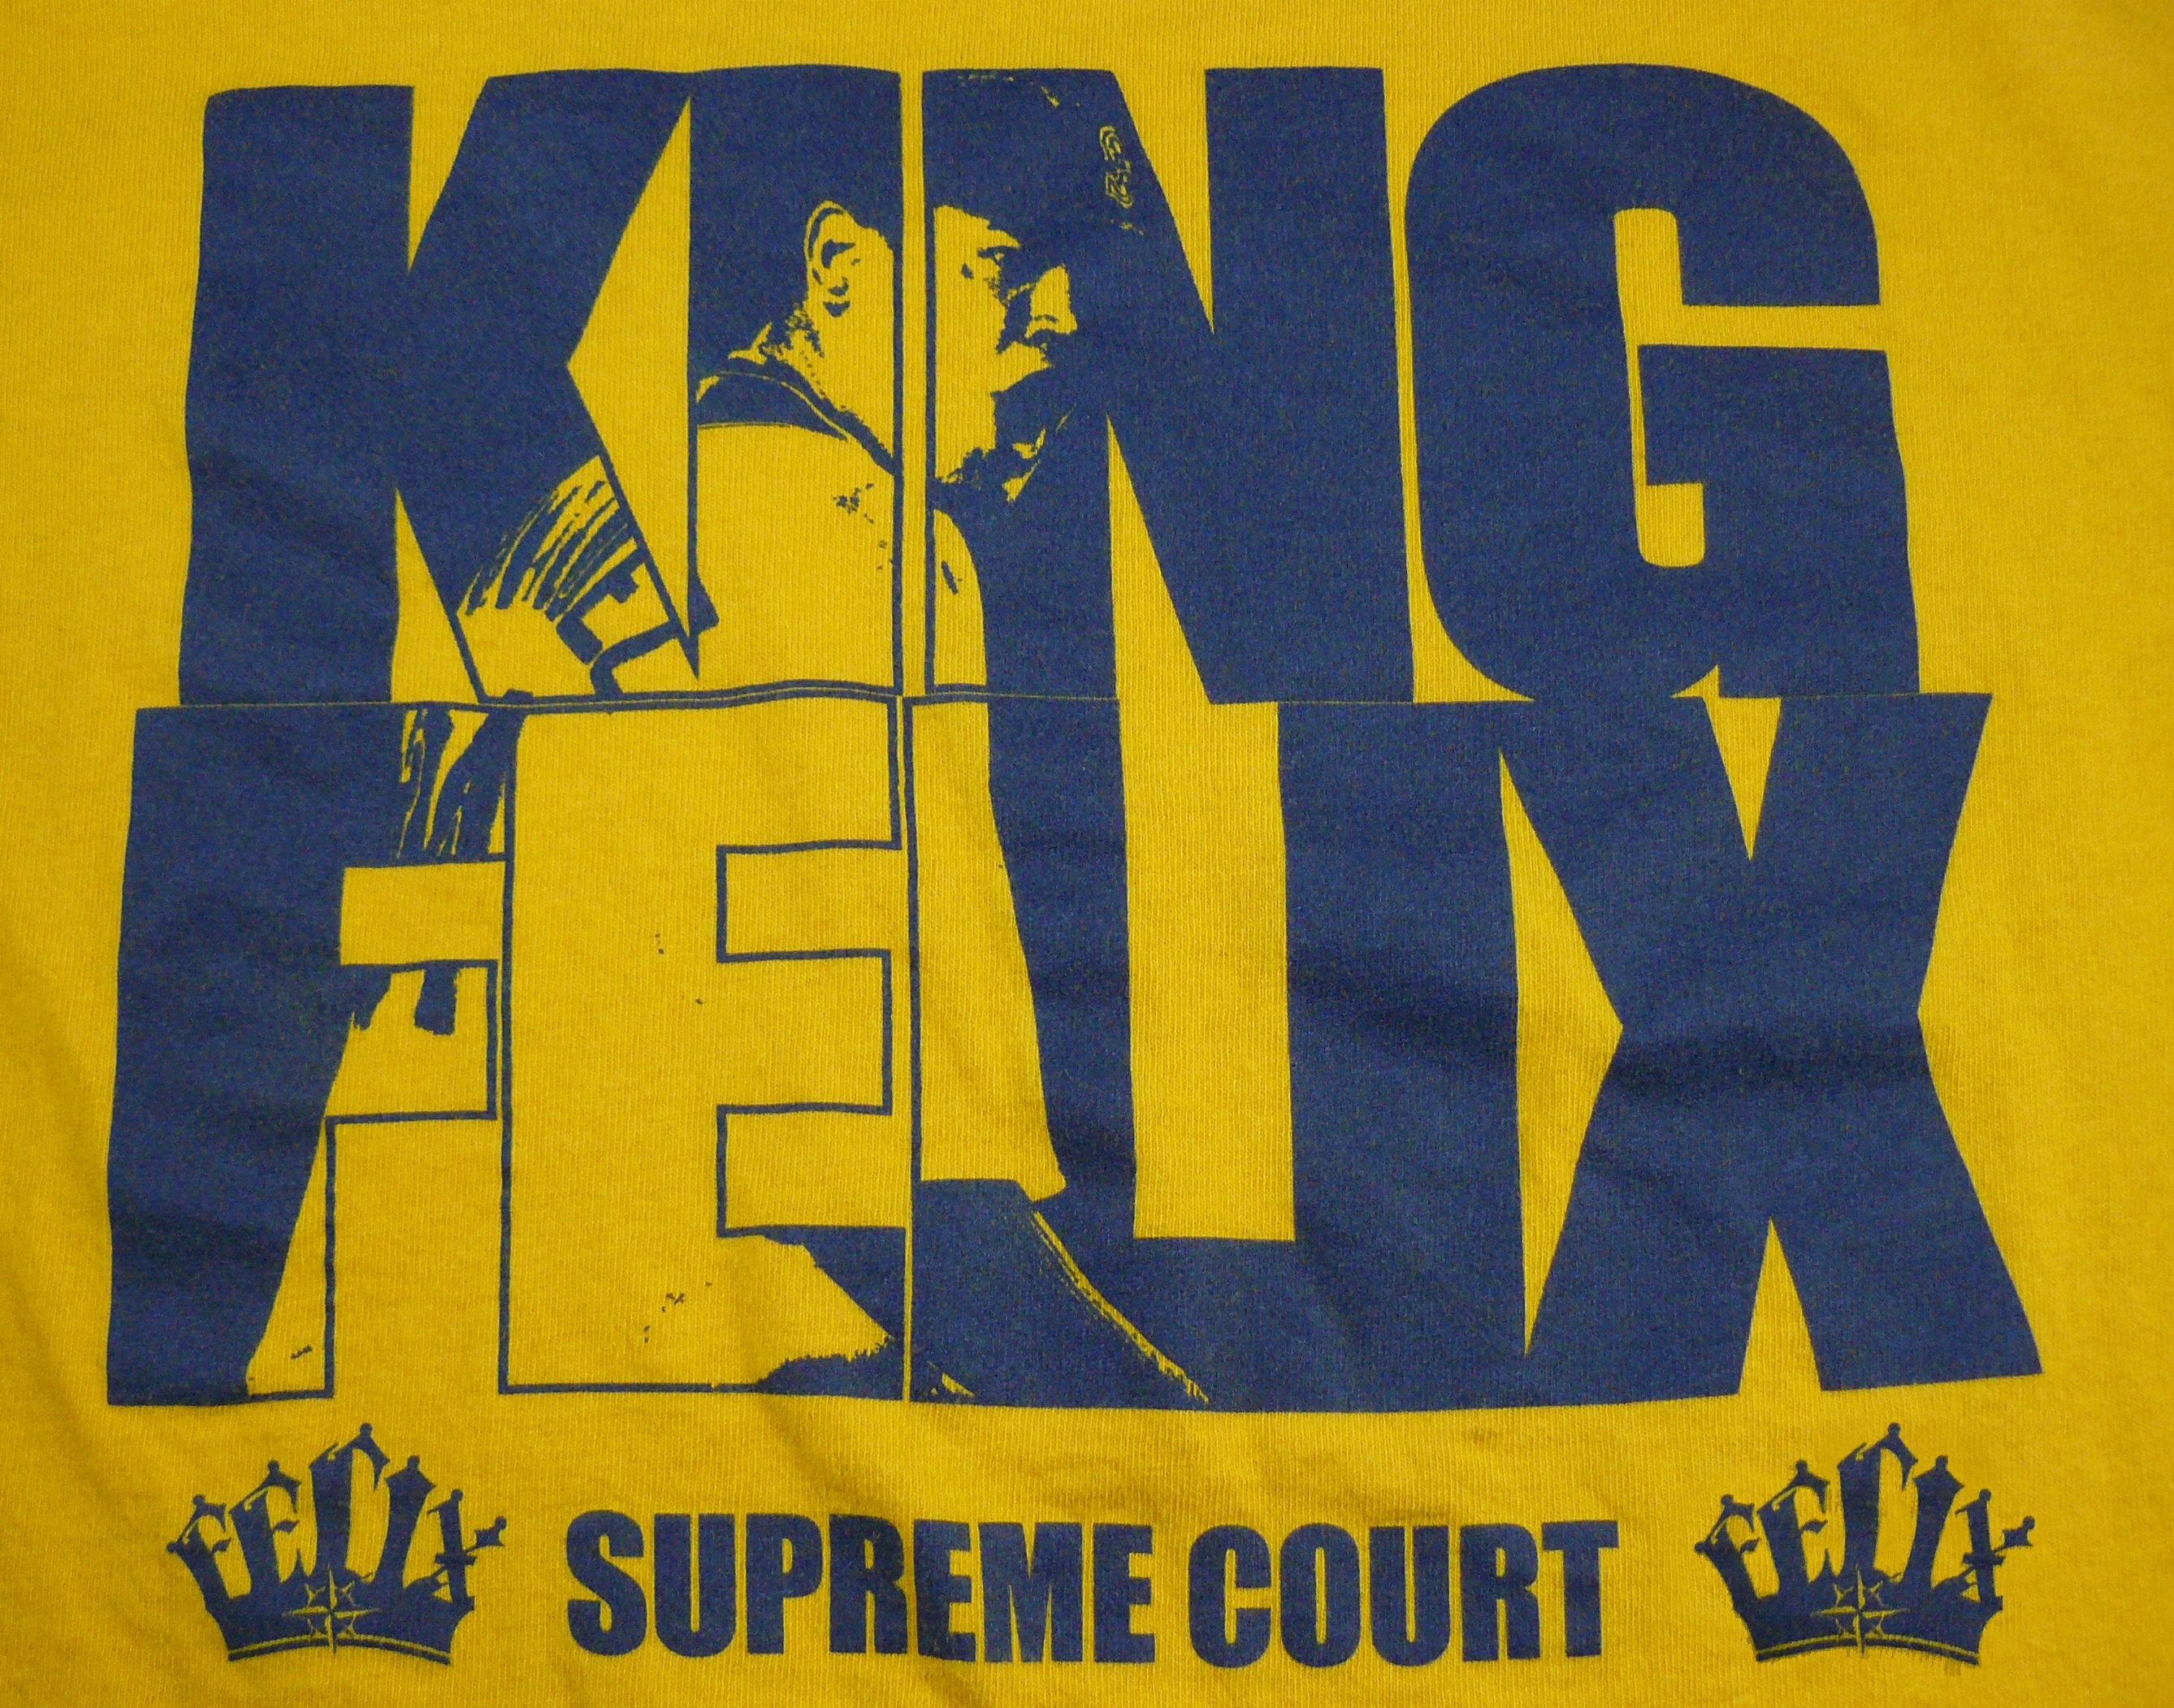 How Did Felix Hernandez Get the Nickname King Felix?